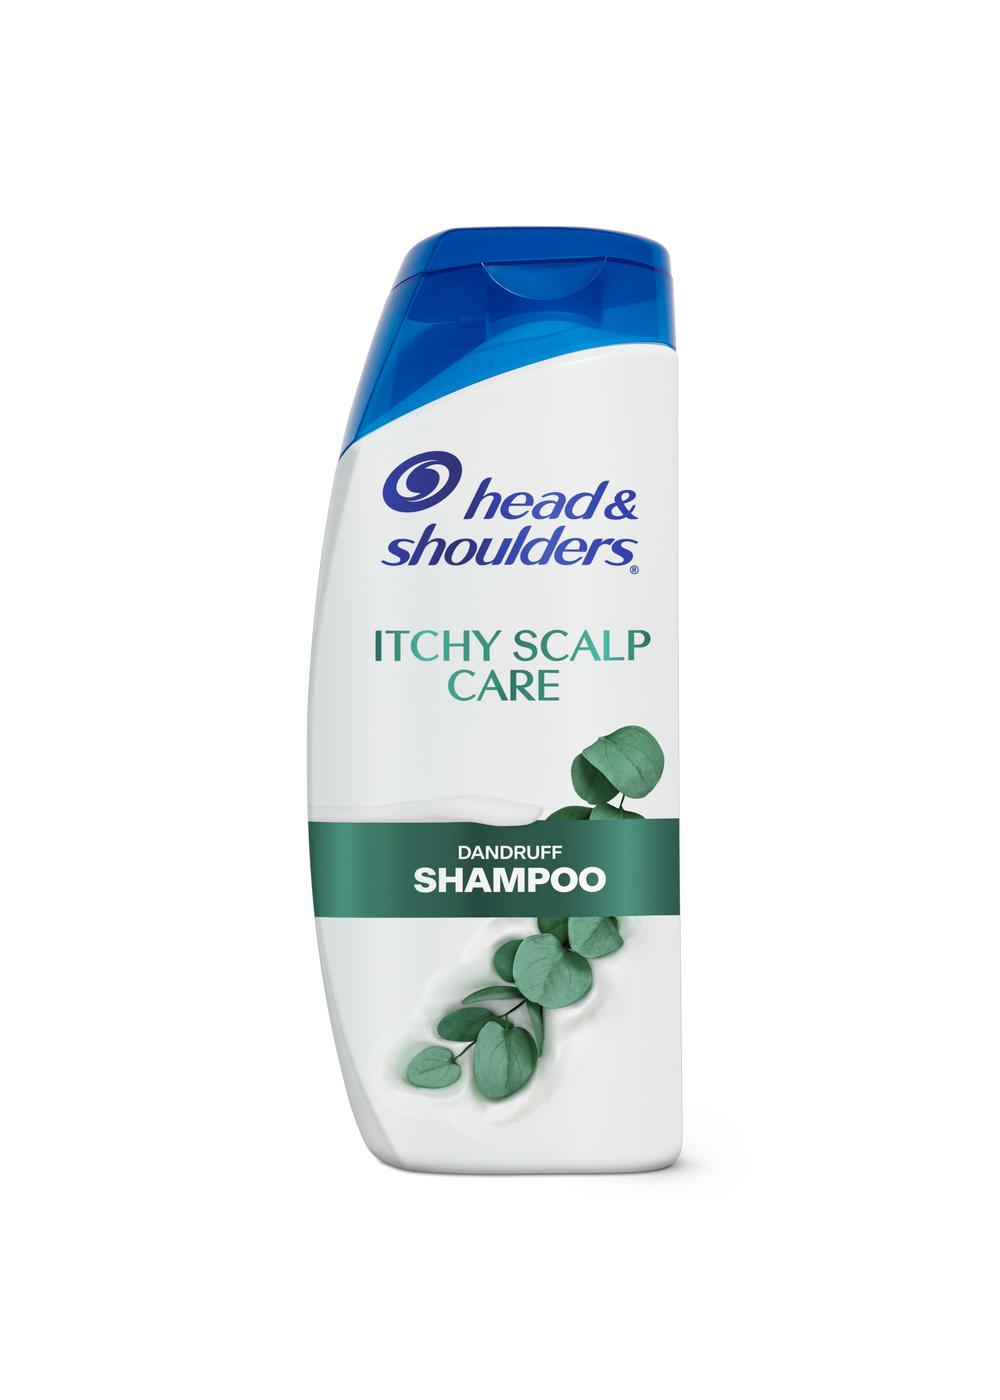 Head & Shoulders Dandruff Shampoo - Itchy Scalp Care; image 4 of 11